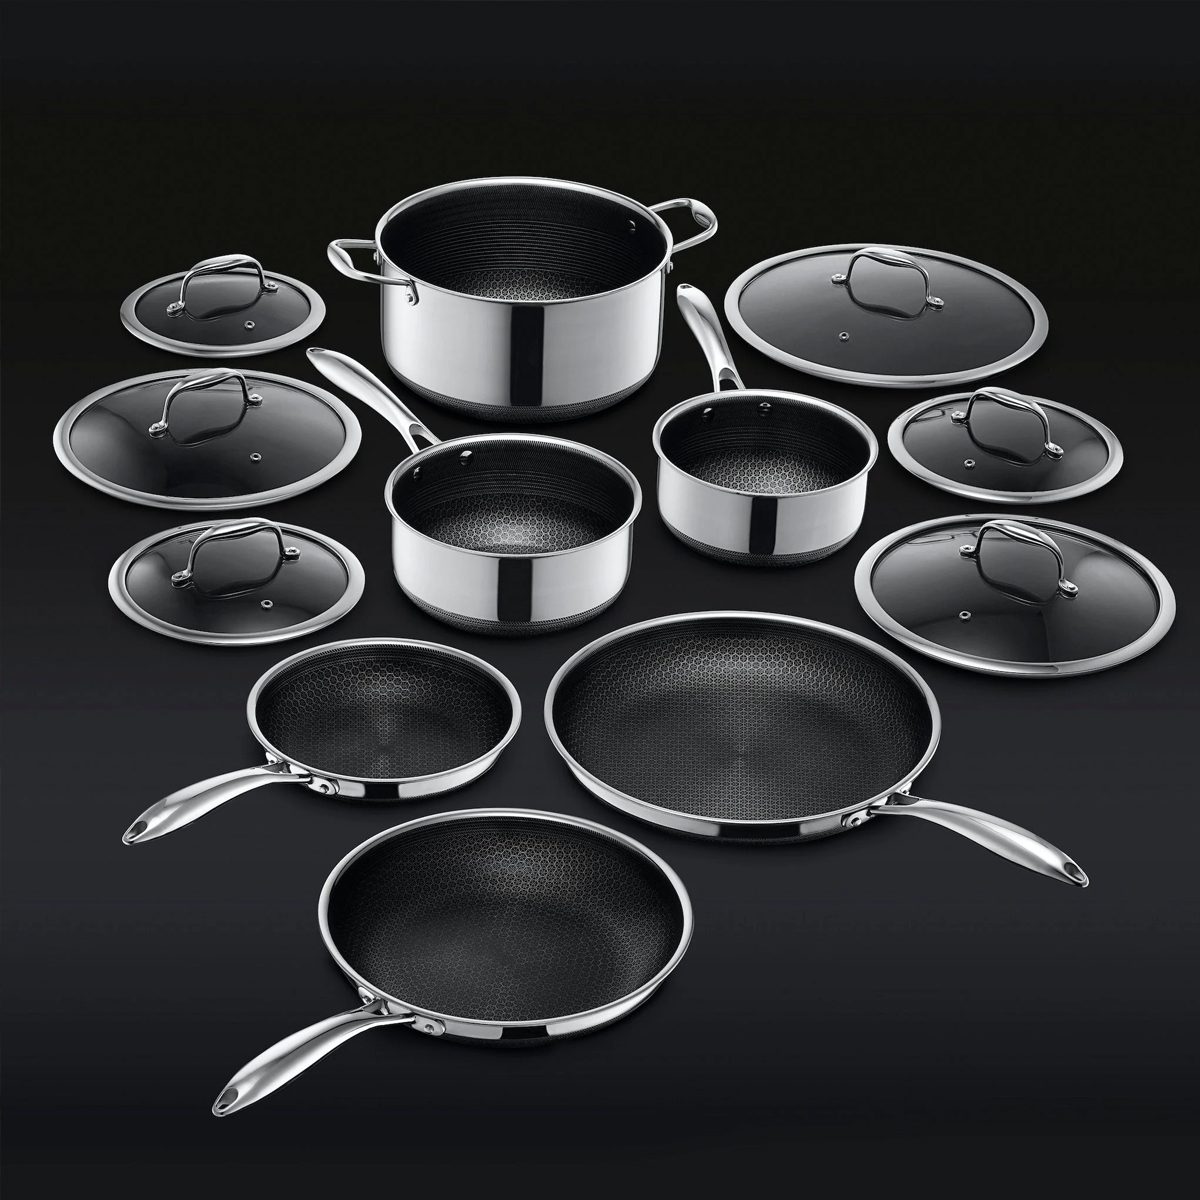 Hexclad Pots And Pans Set